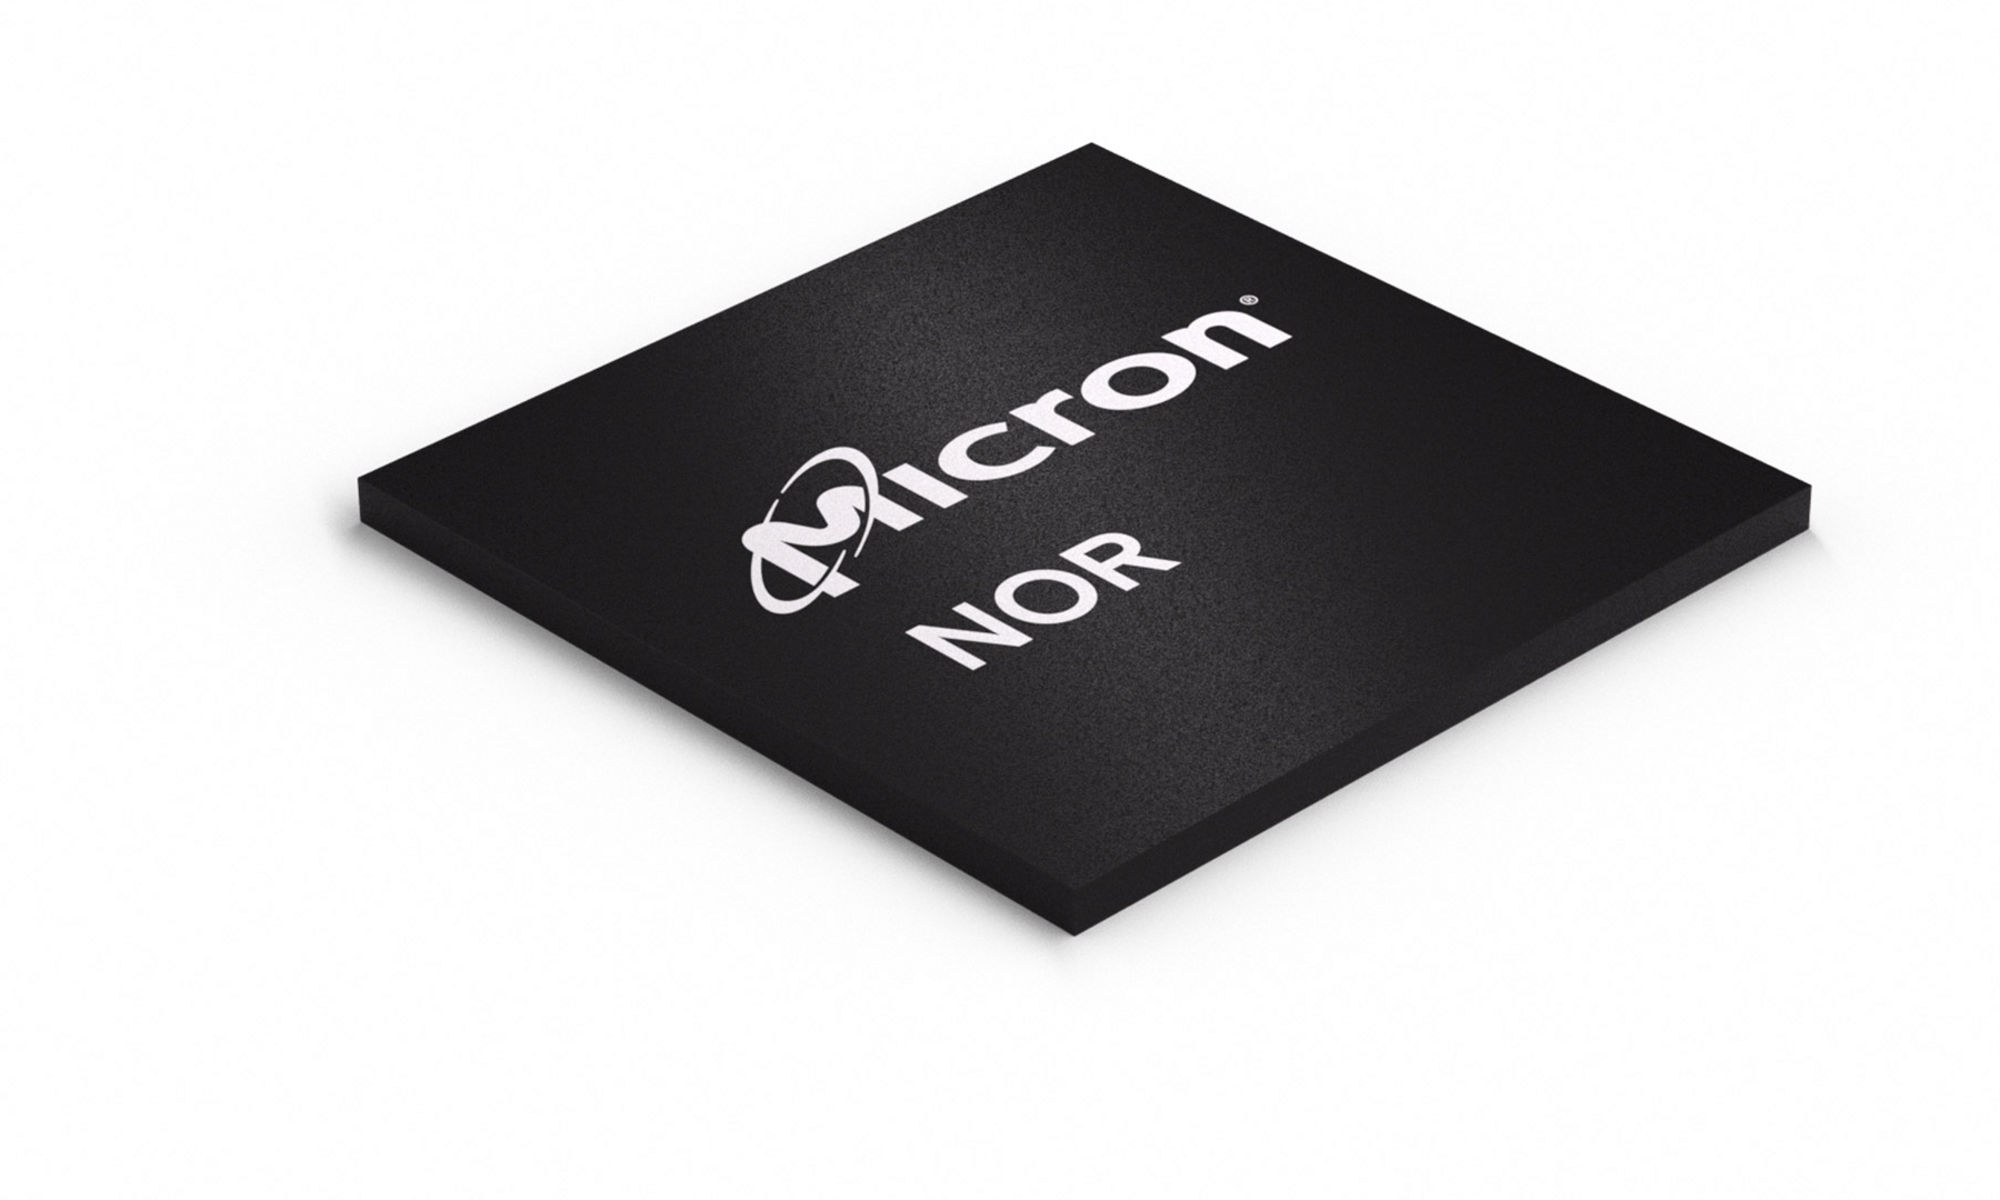 Micron NOR flash component